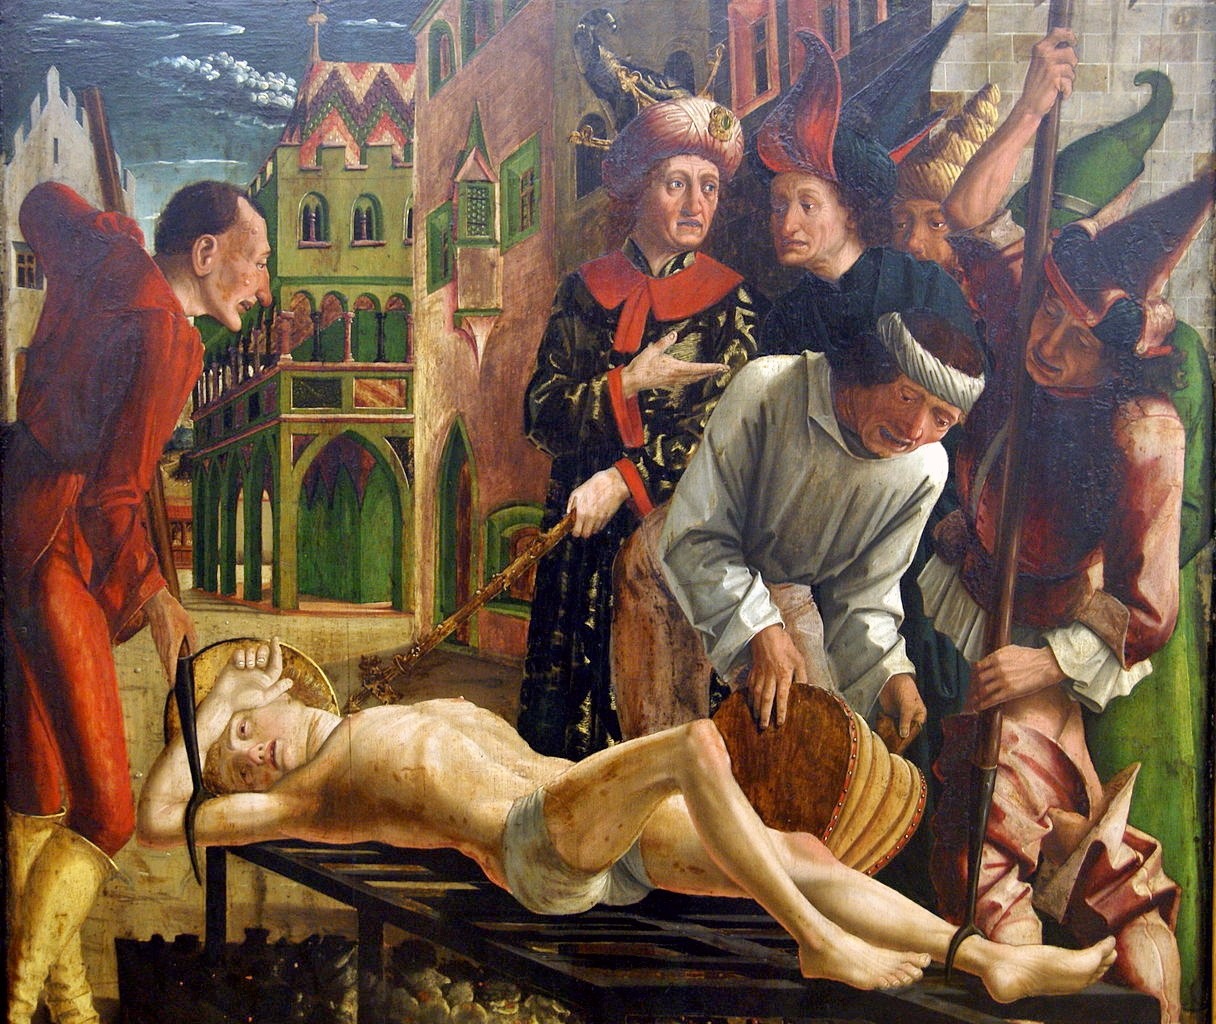 Michael Pacher (c. 1435, Bruneck, Sudtyrol - 1498 Salzburg); The Martyrdom of St.